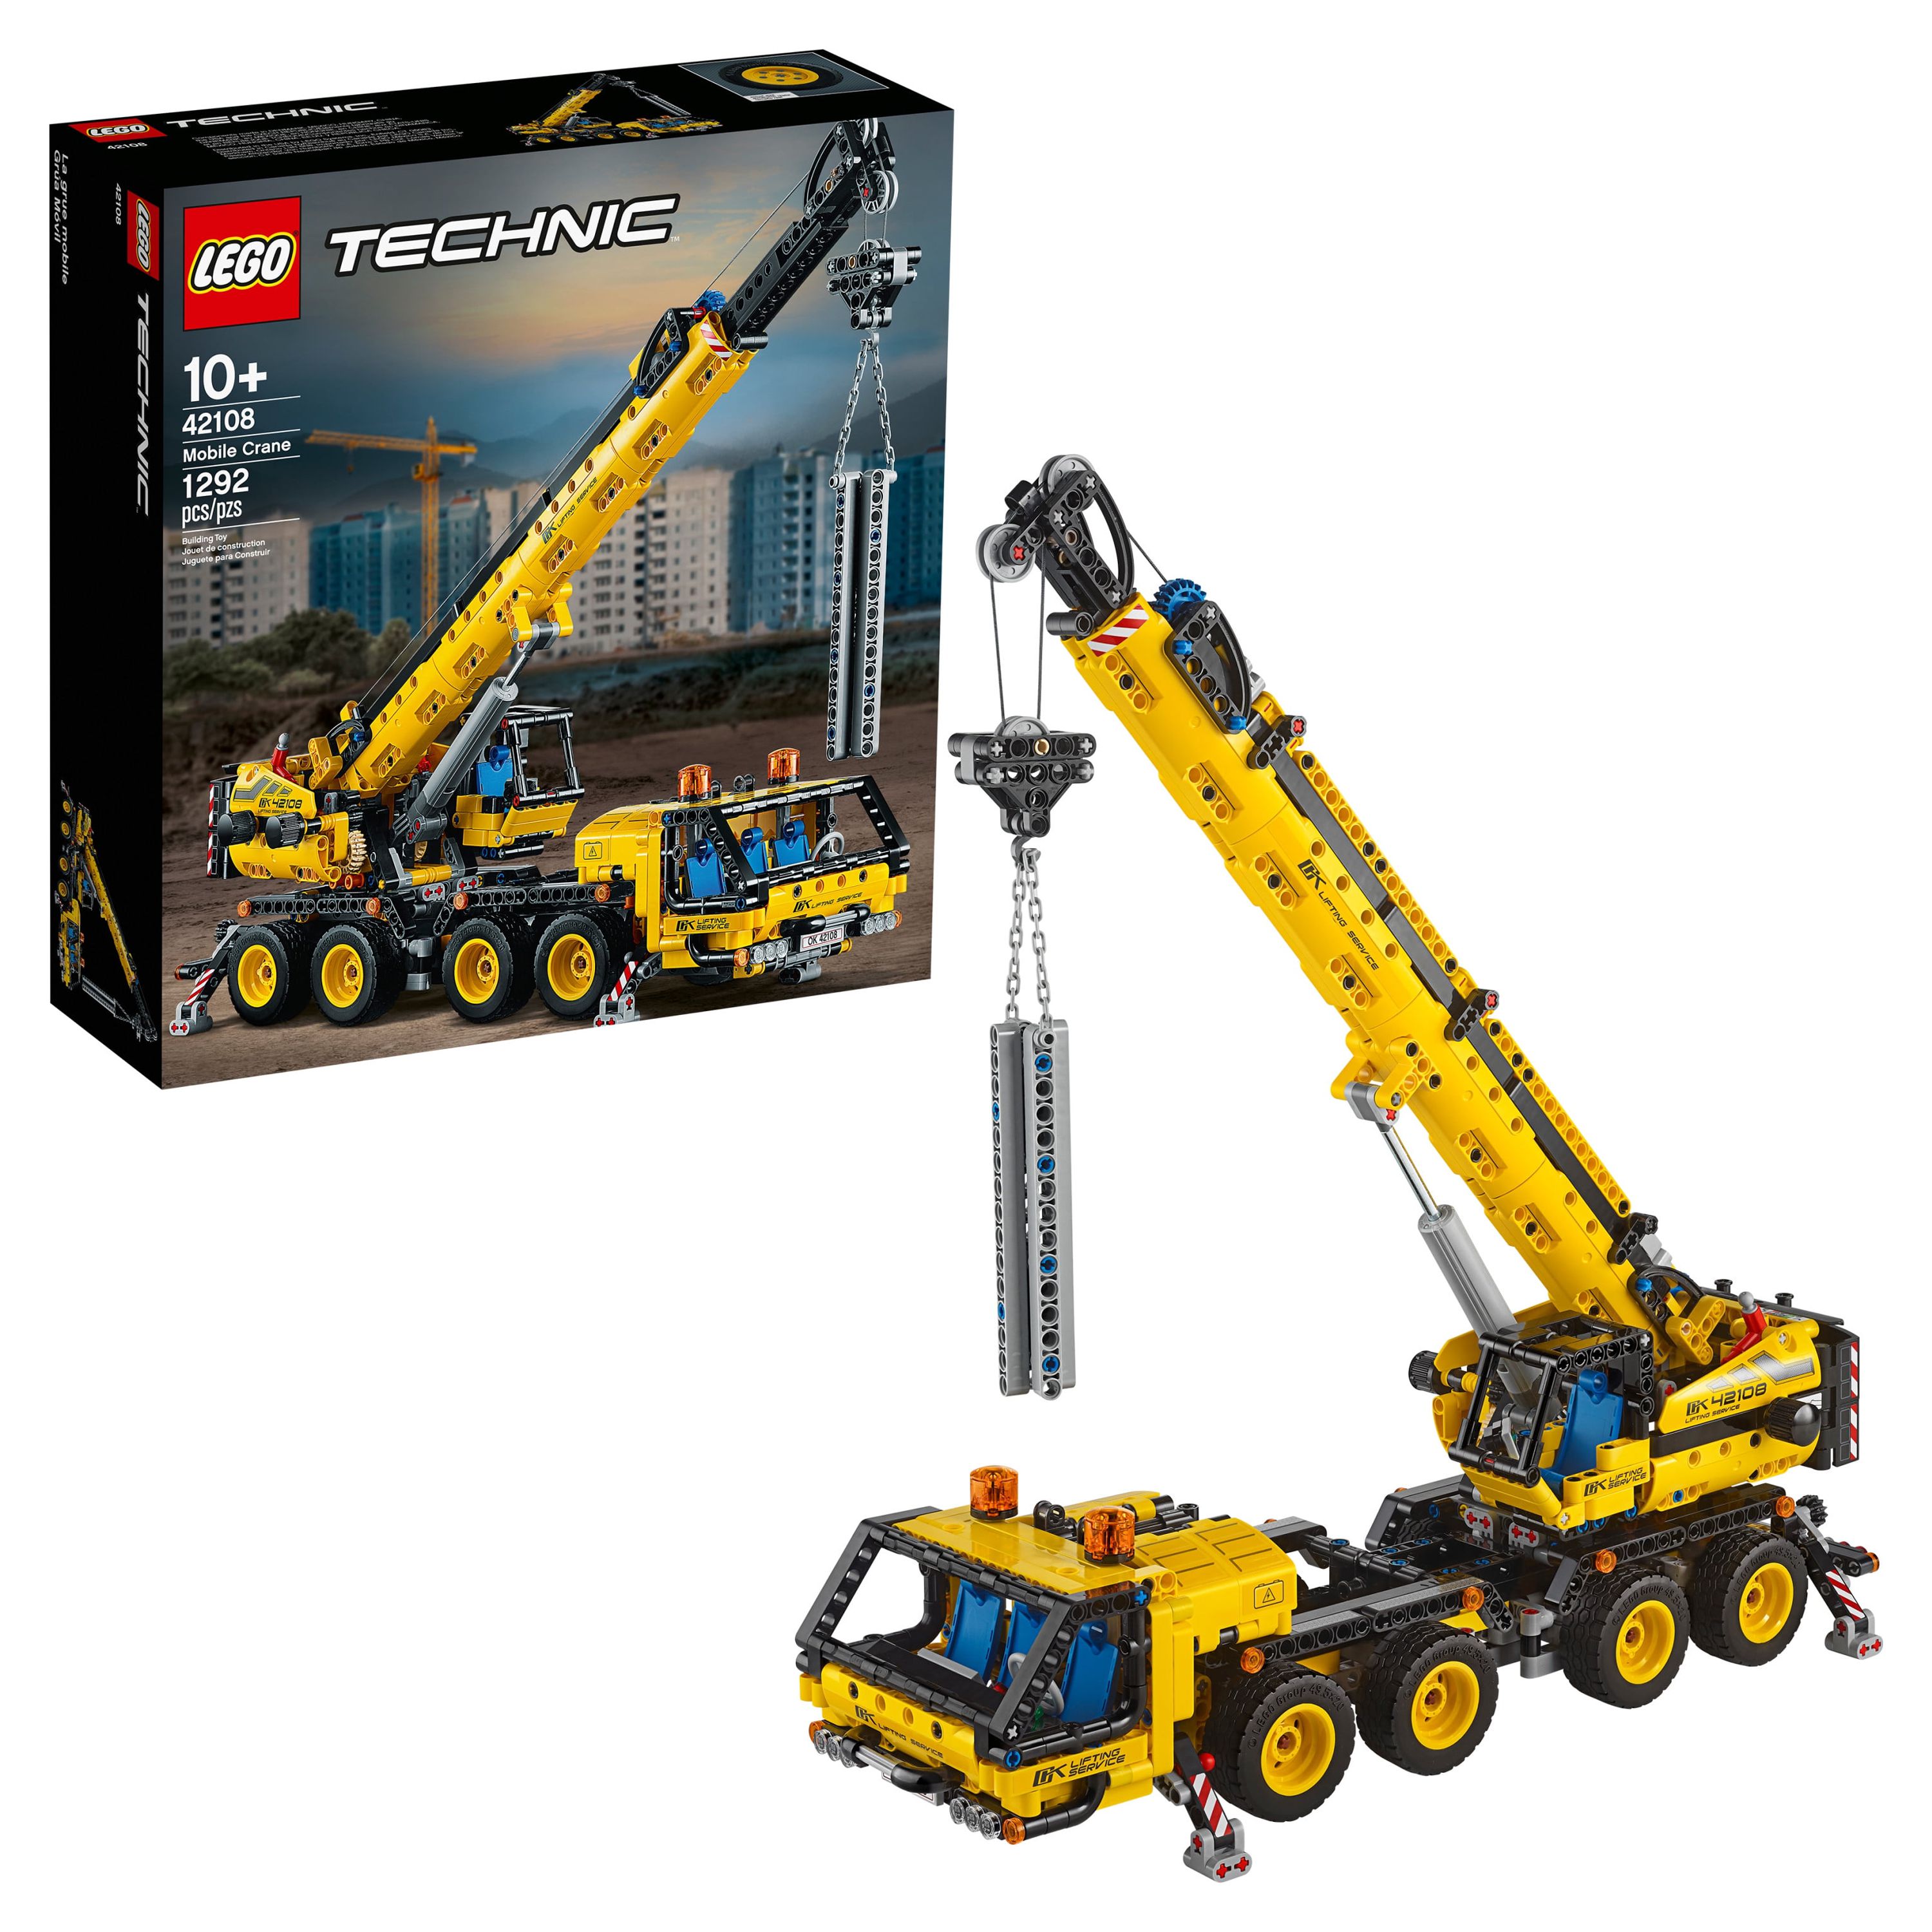 LEGO Technic Mobile Crane 42108 Construction Toy Building Kit (1,292 pieces) - image 1 of 10